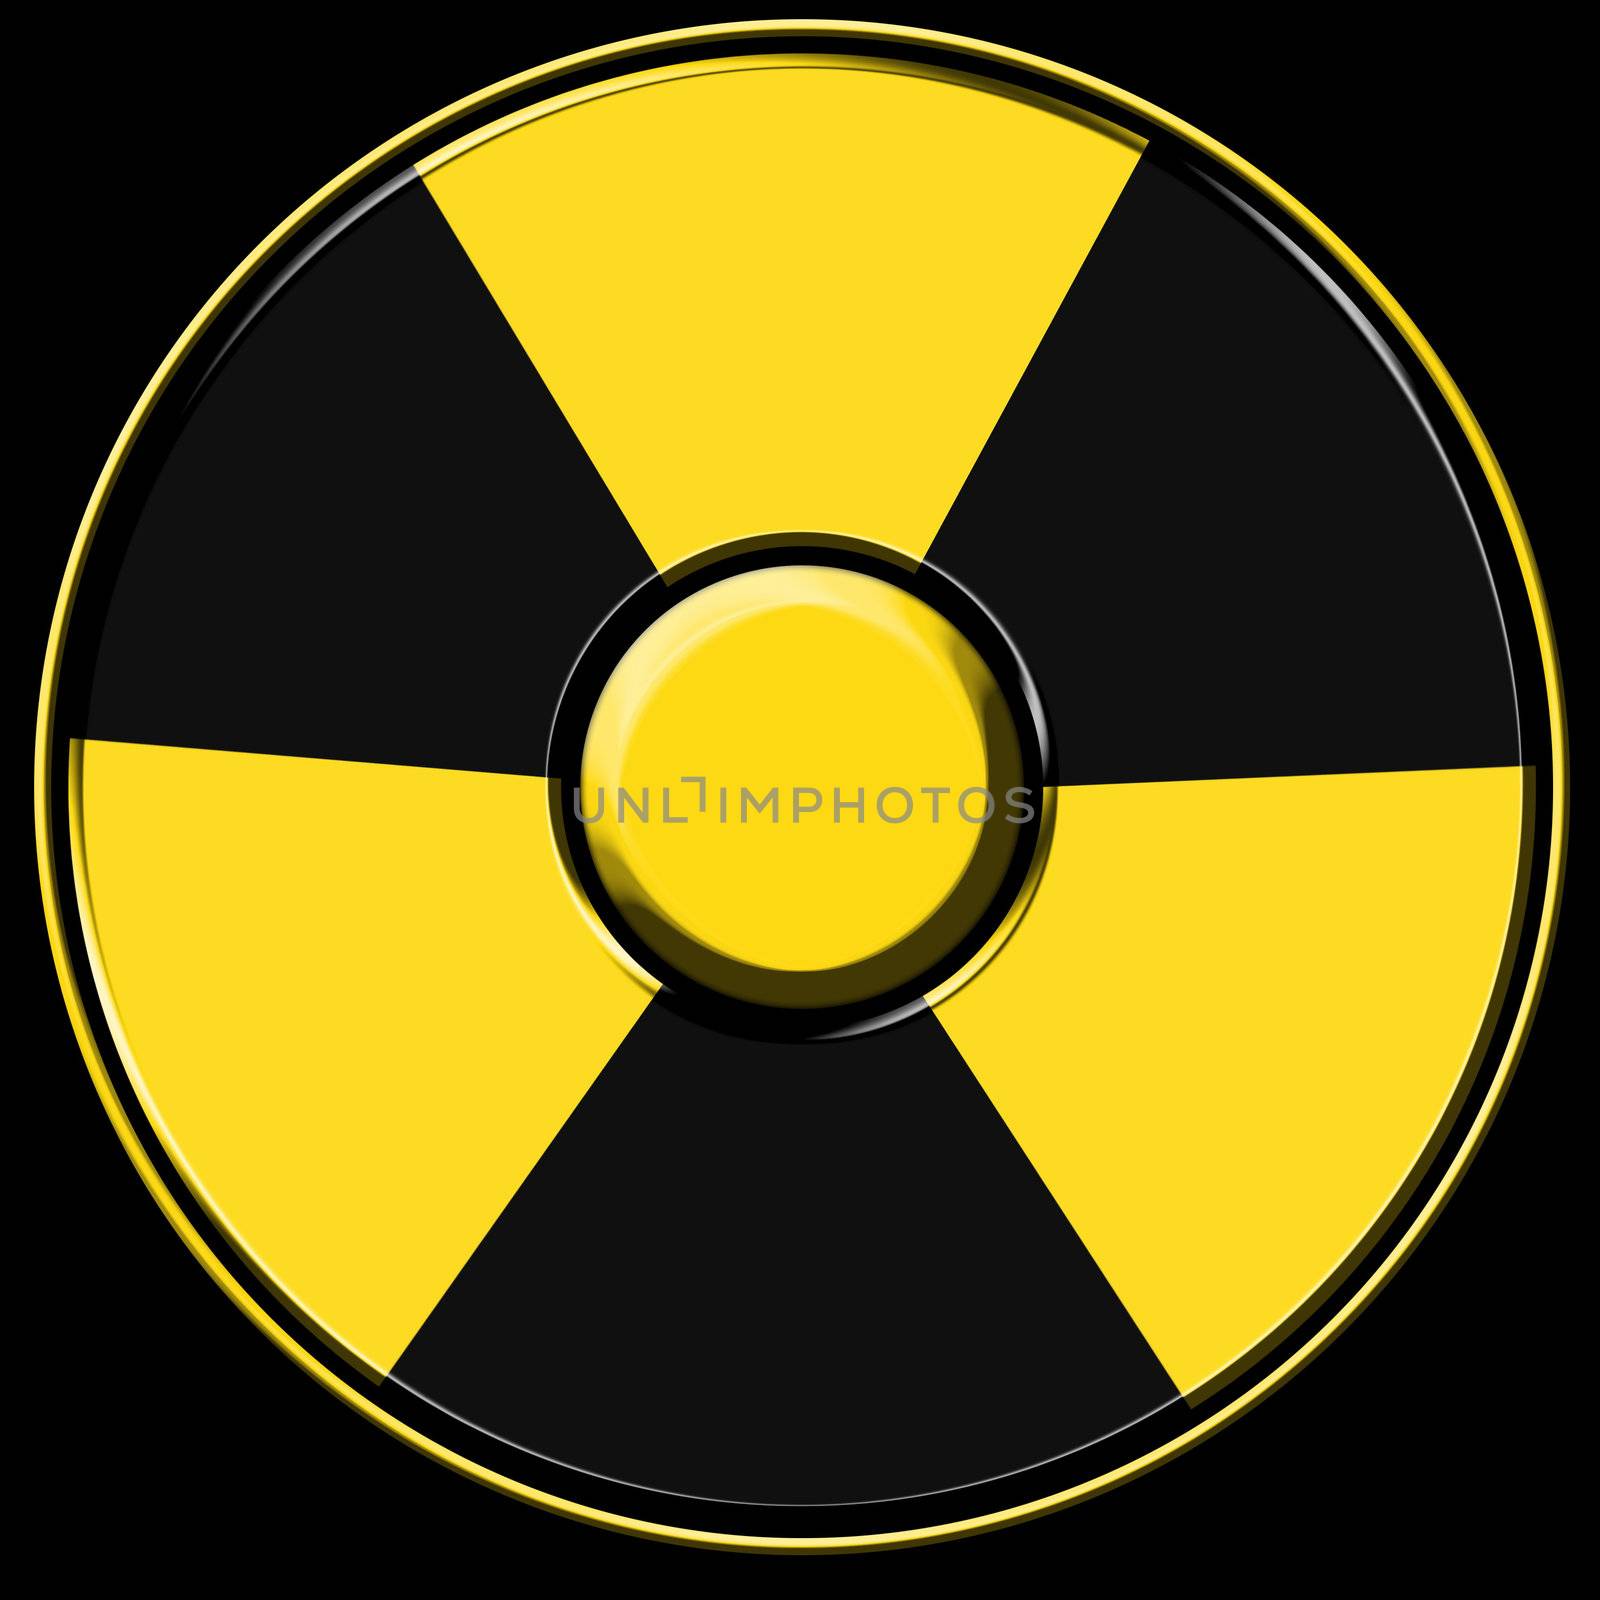 warning symbol of radiation